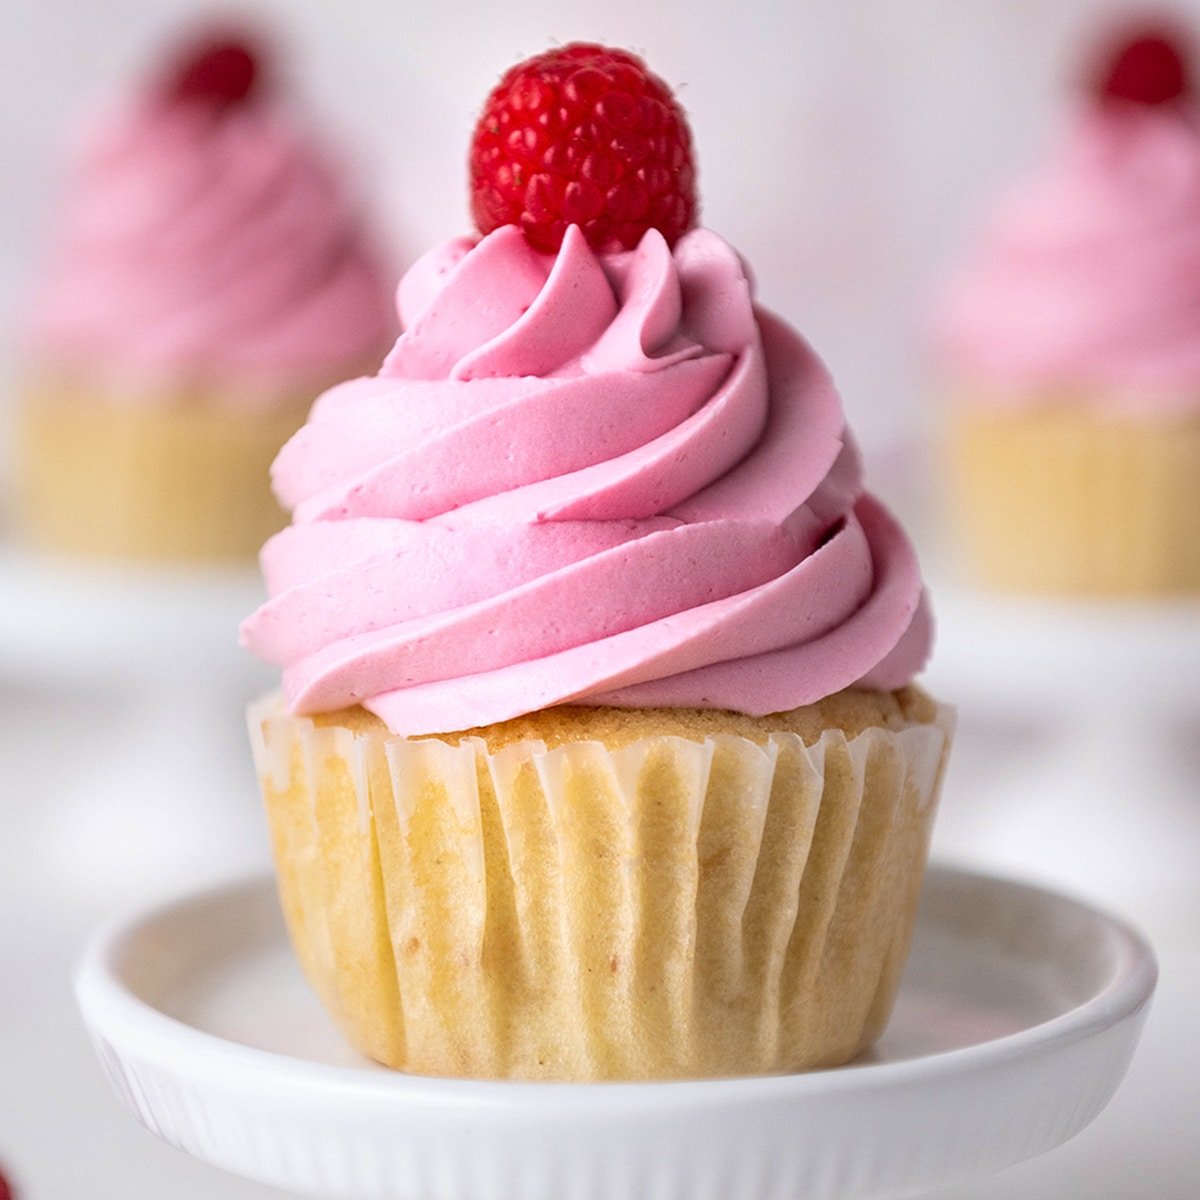 raspberry buttercream on a vanilla cupcake